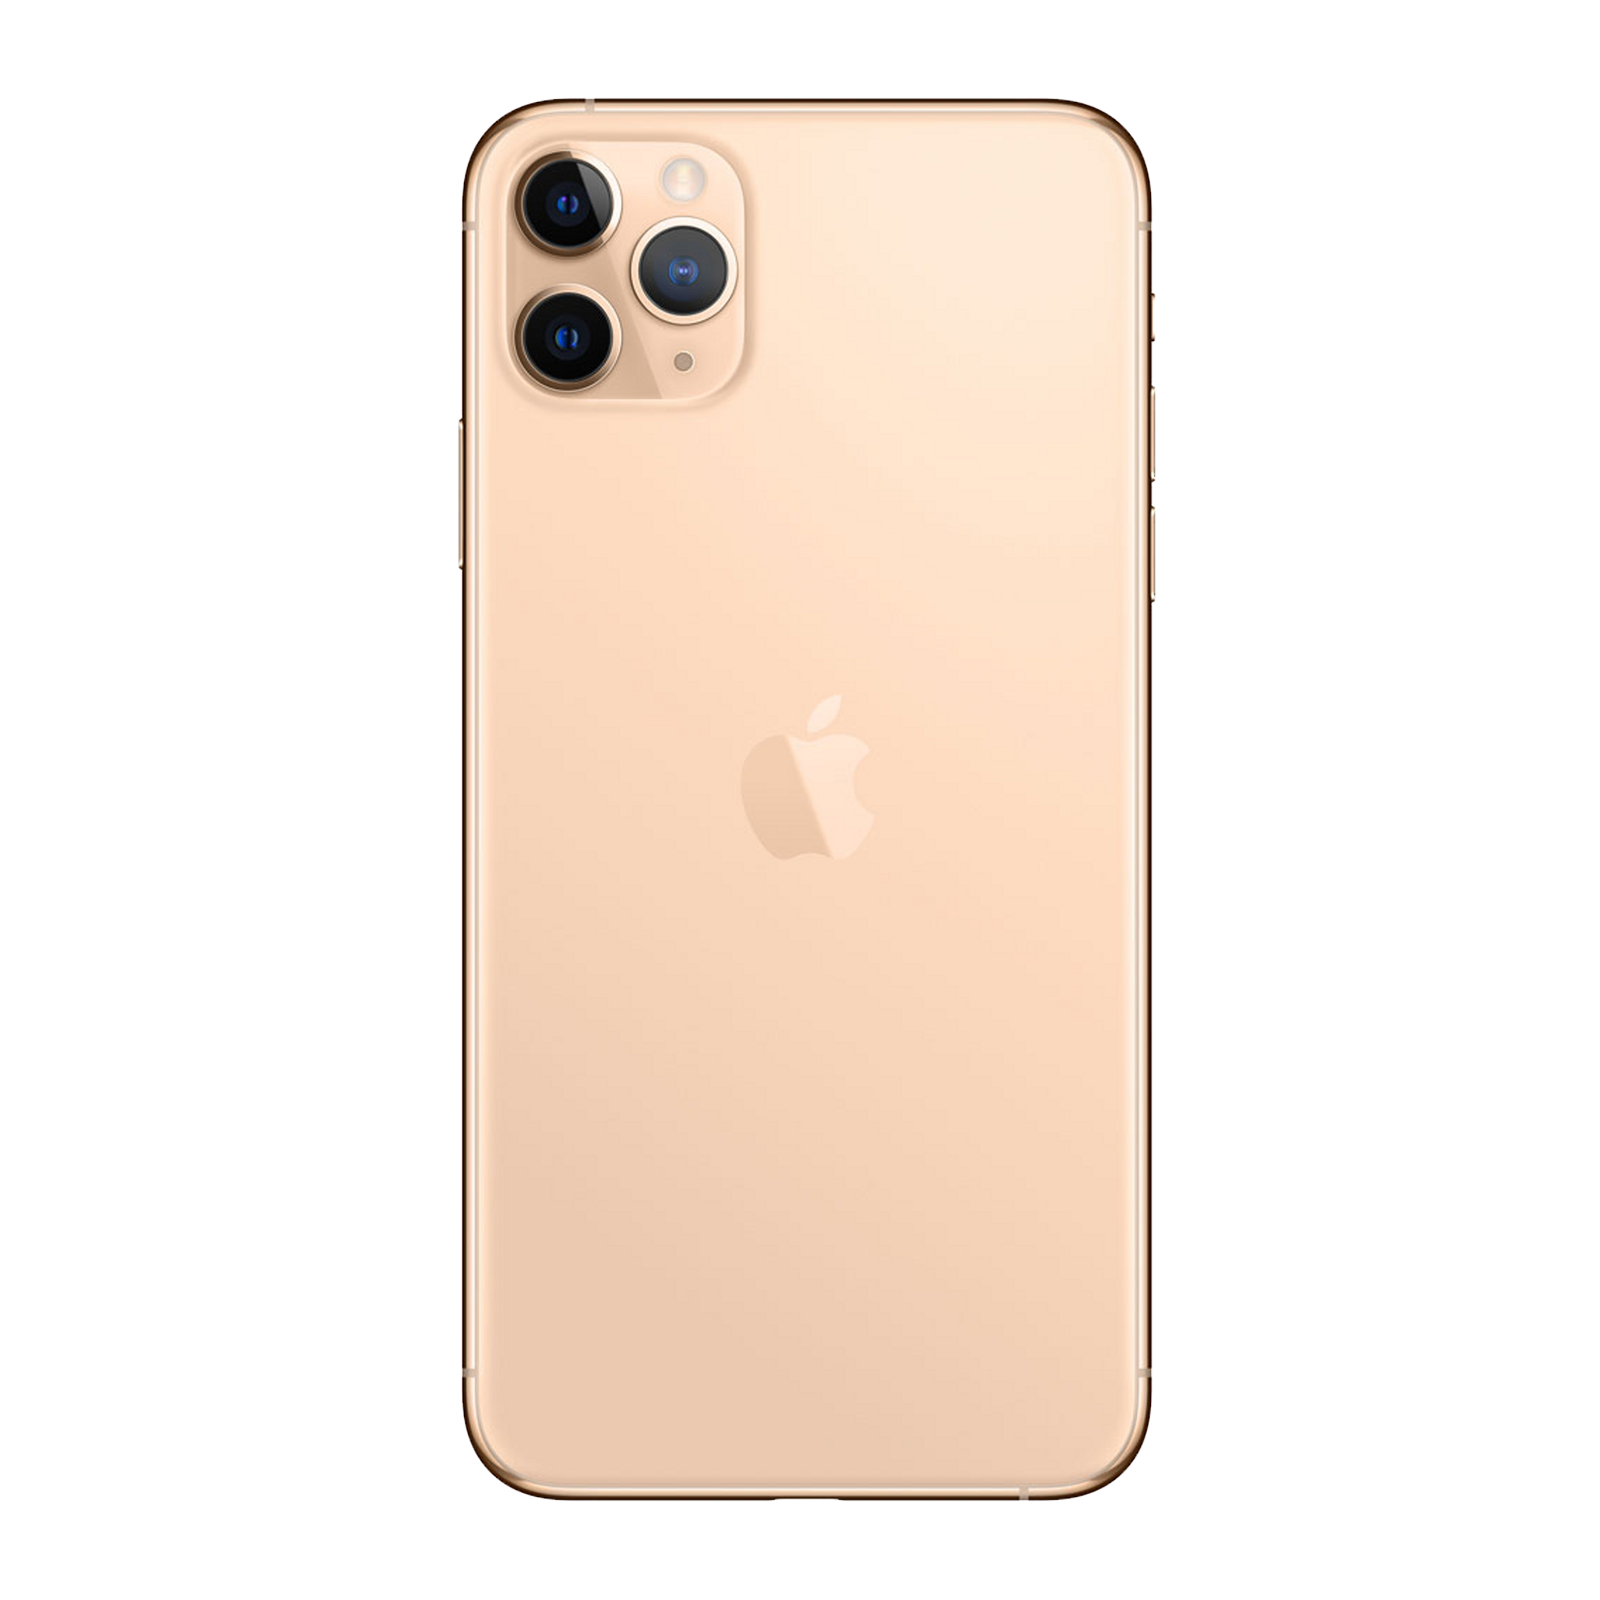 Apple iPhone 11 Pro Max 256GB Gold Very Good - Unlocked